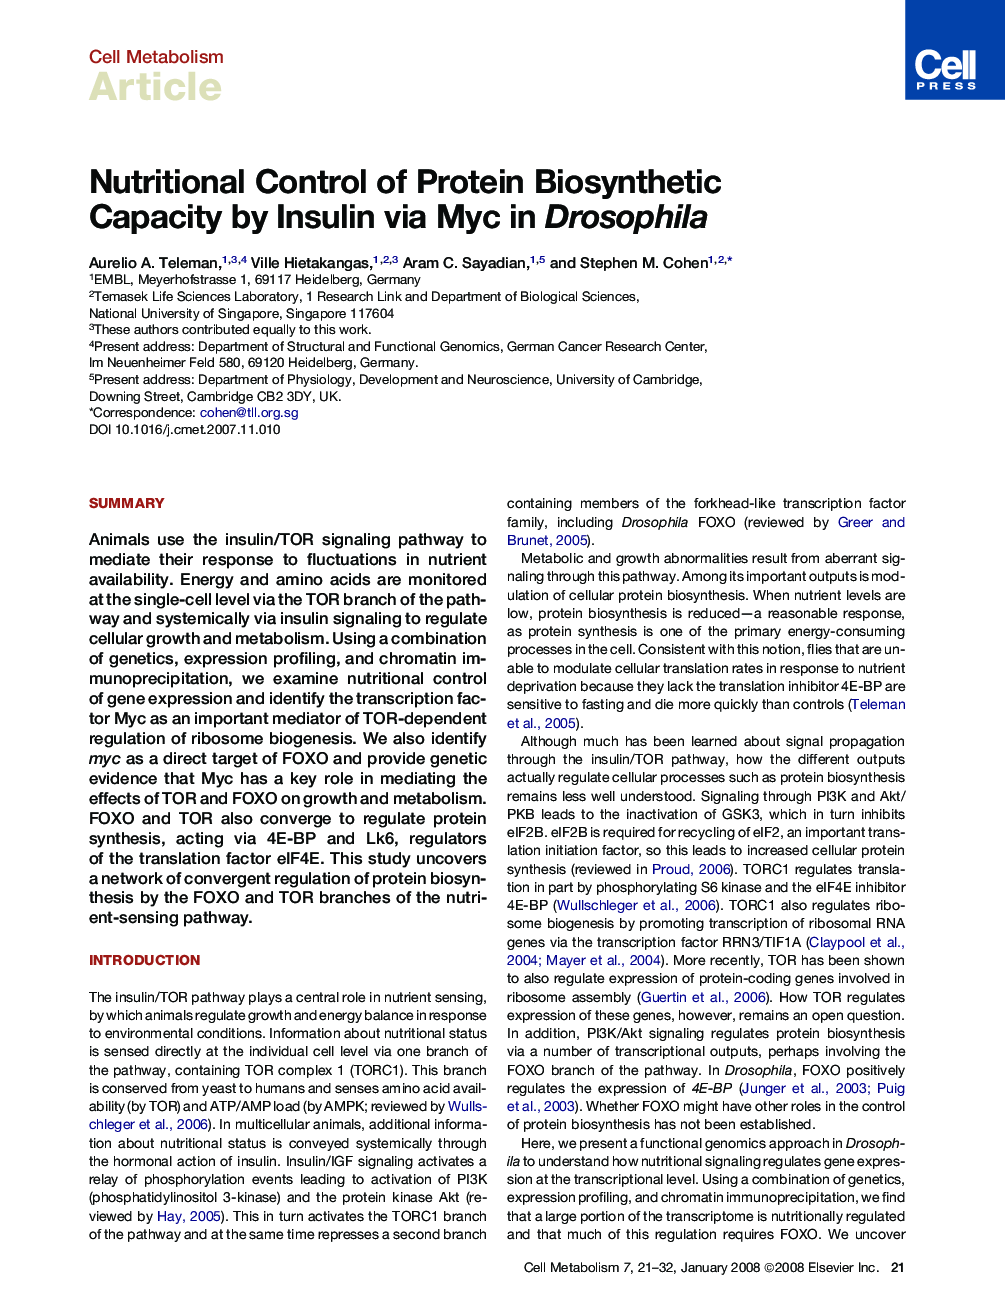 Nutritional Control of Protein Biosynthetic Capacity by Insulin via Myc in Drosophila